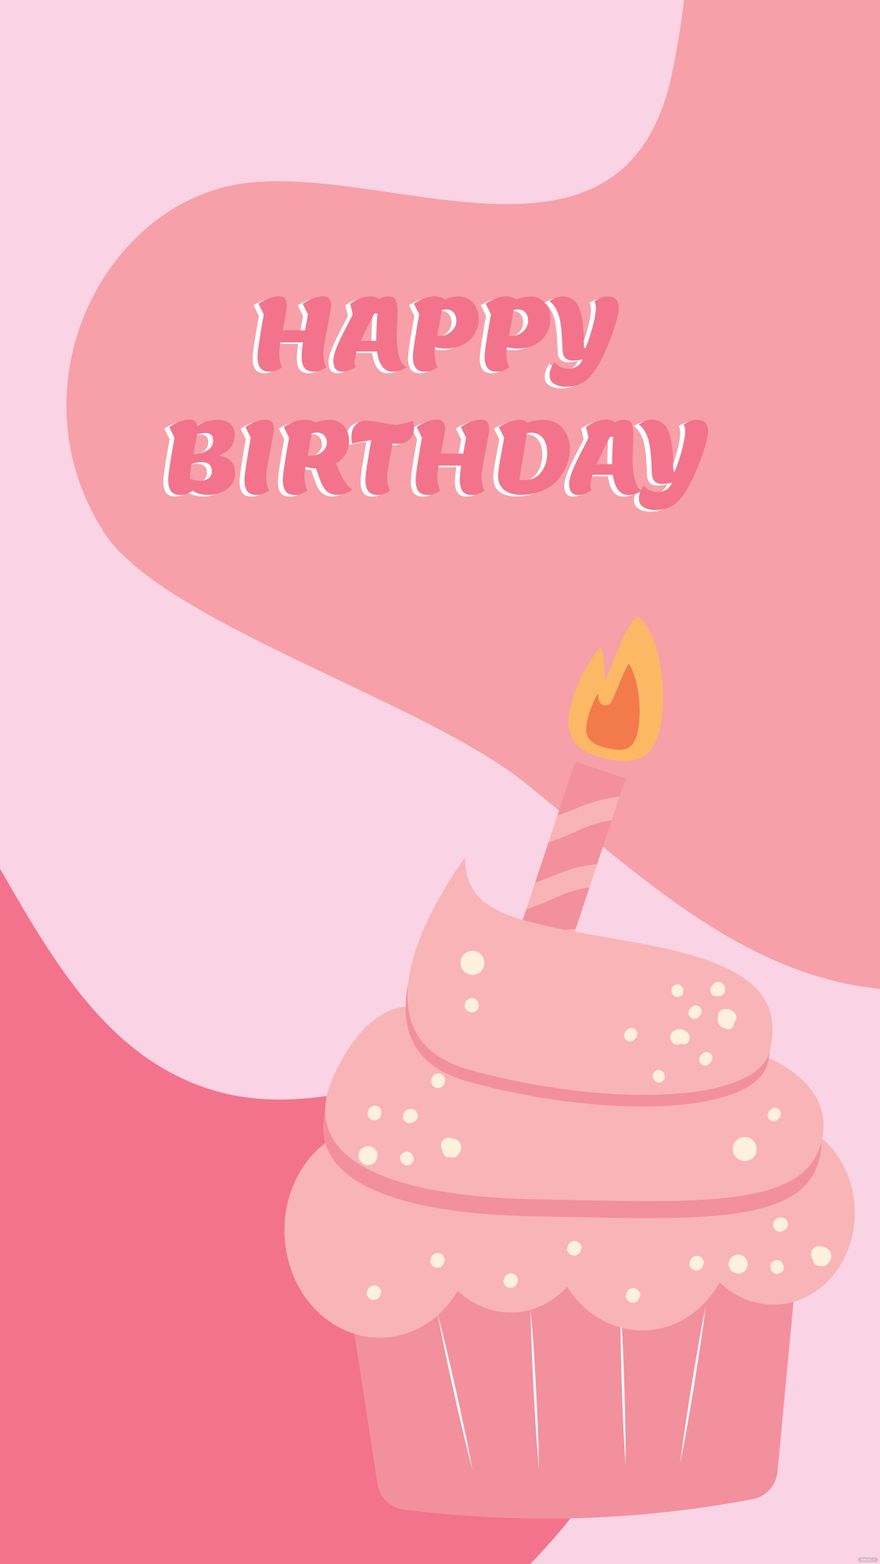 FREE Birthday Mobile Background Download in Illustrator, EPS, SVG, JPG, PNG